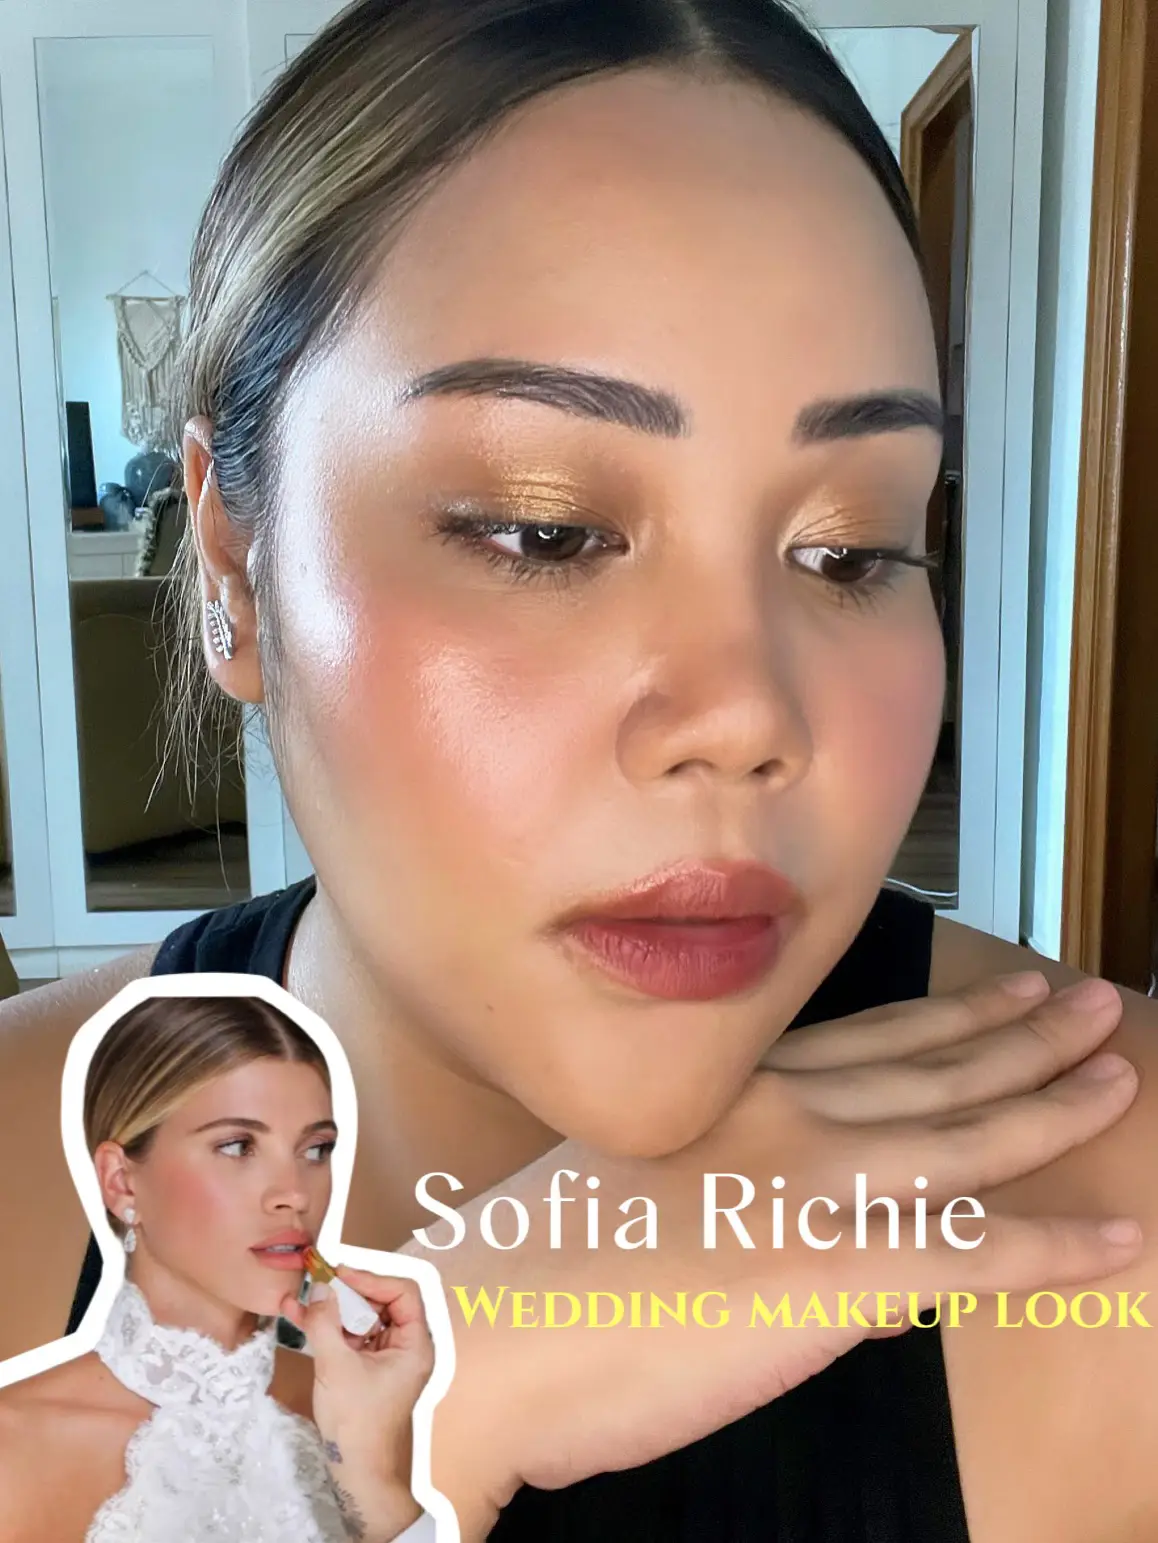 Sofia Richie Just Re-Created Her Wedding Makeup on TikTok